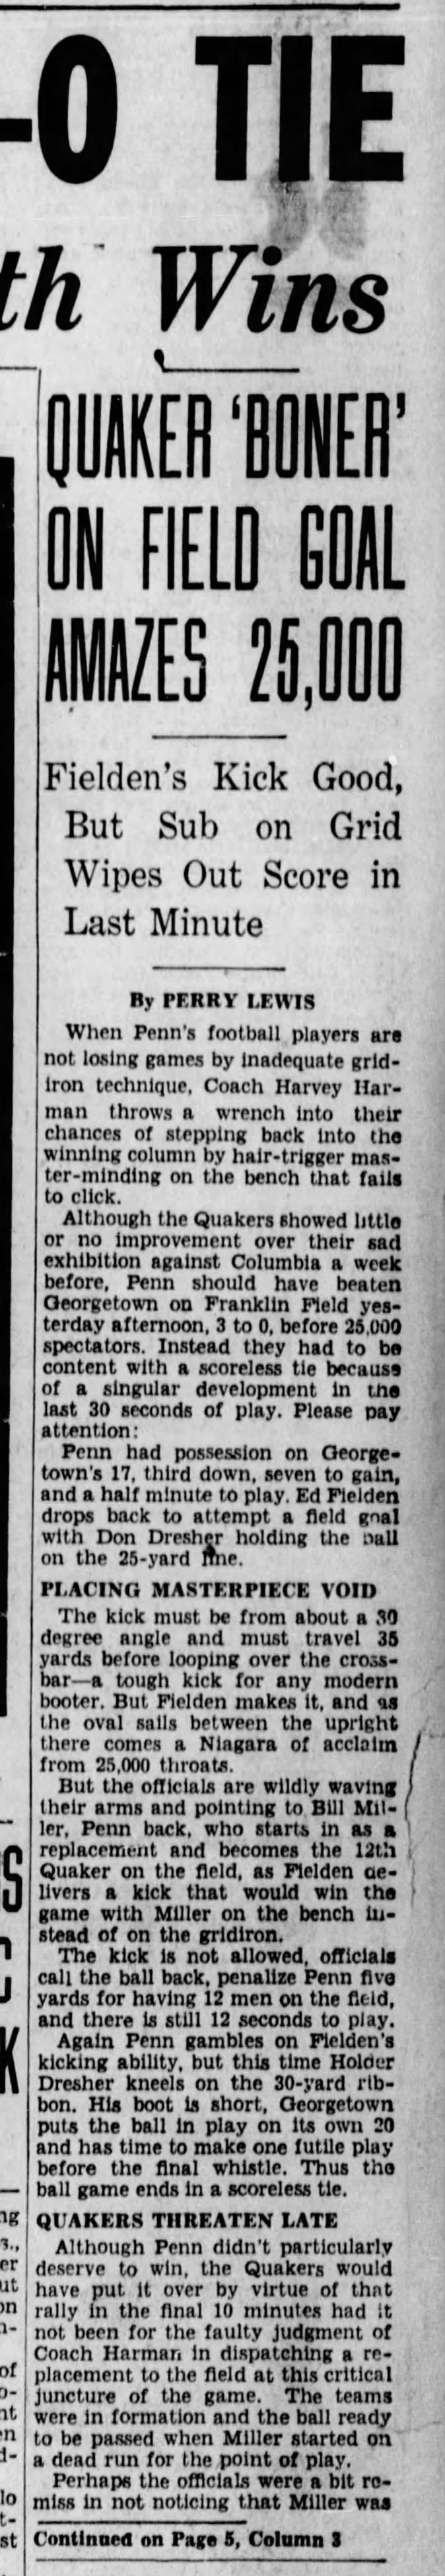 Penn Blunders, Georgetown Gets 0-0 Tie: Quaker 'Boner' on Field Goal Amazes 25,000